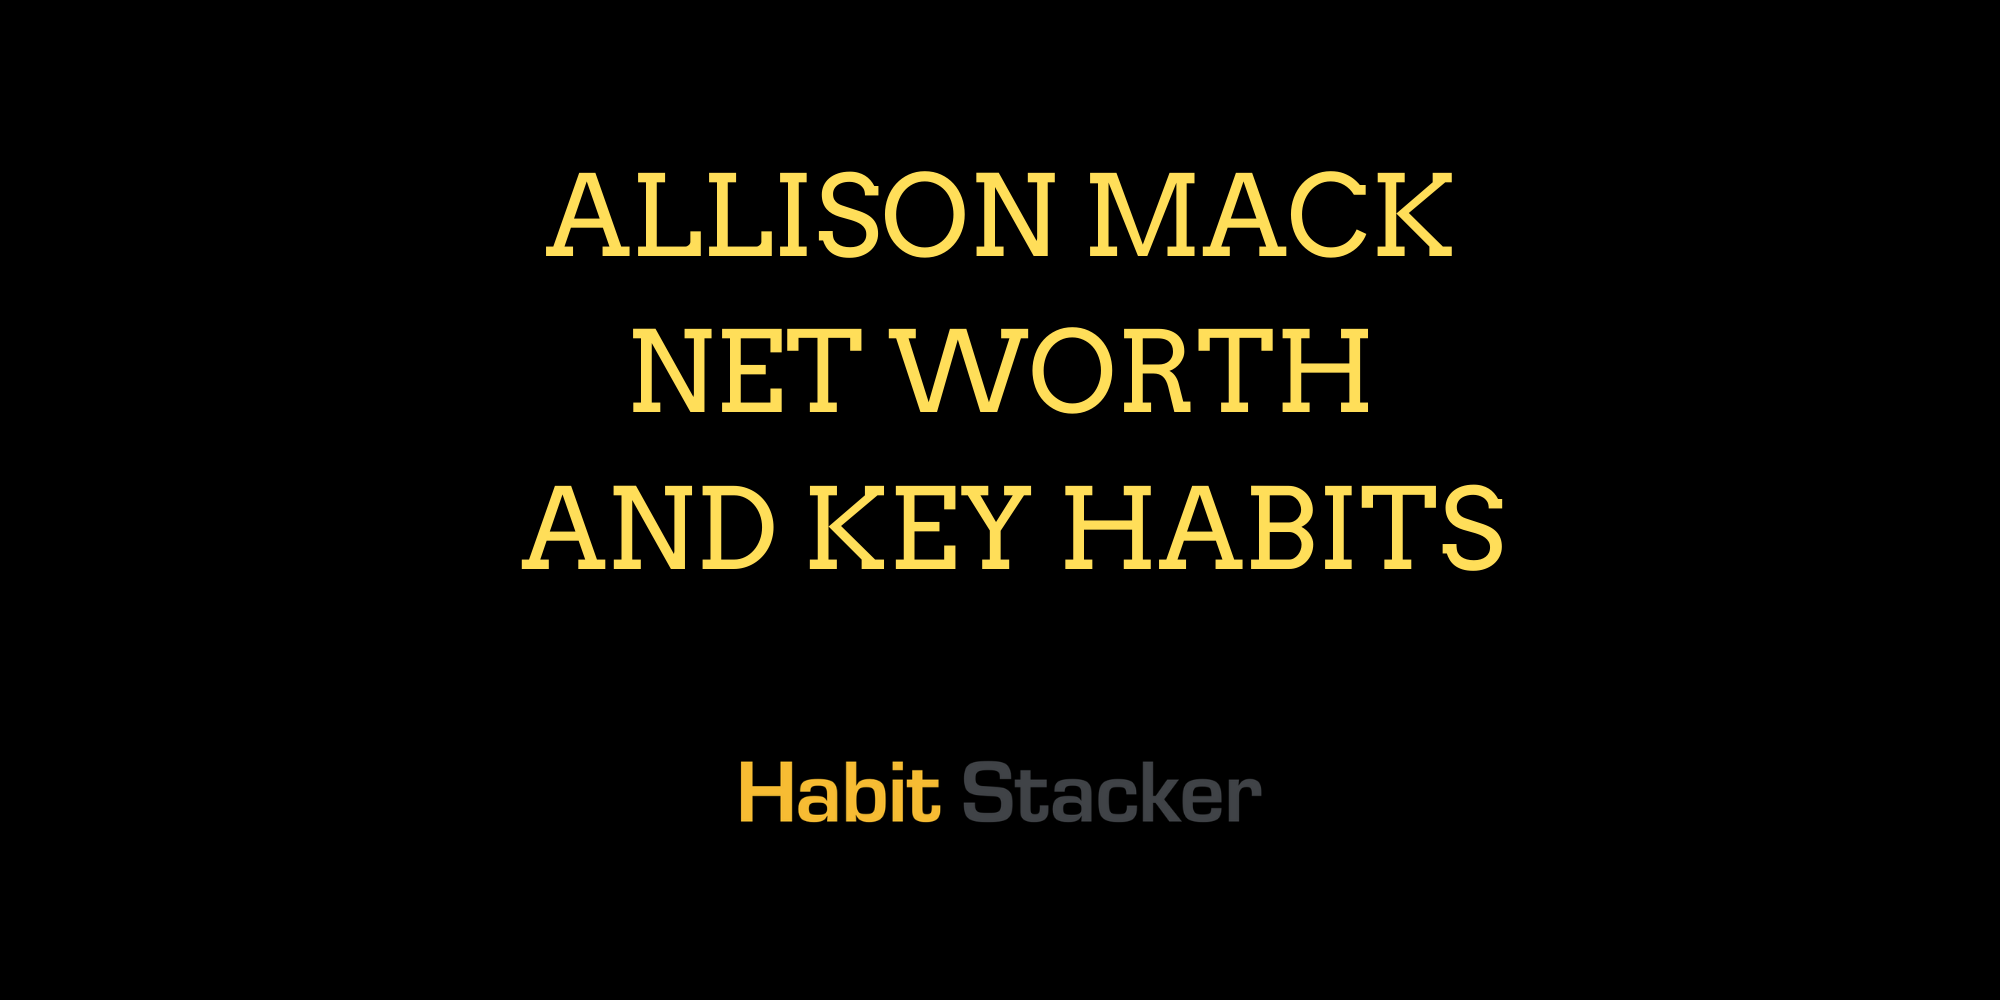 Allison Mack Net Worth and Key Habits